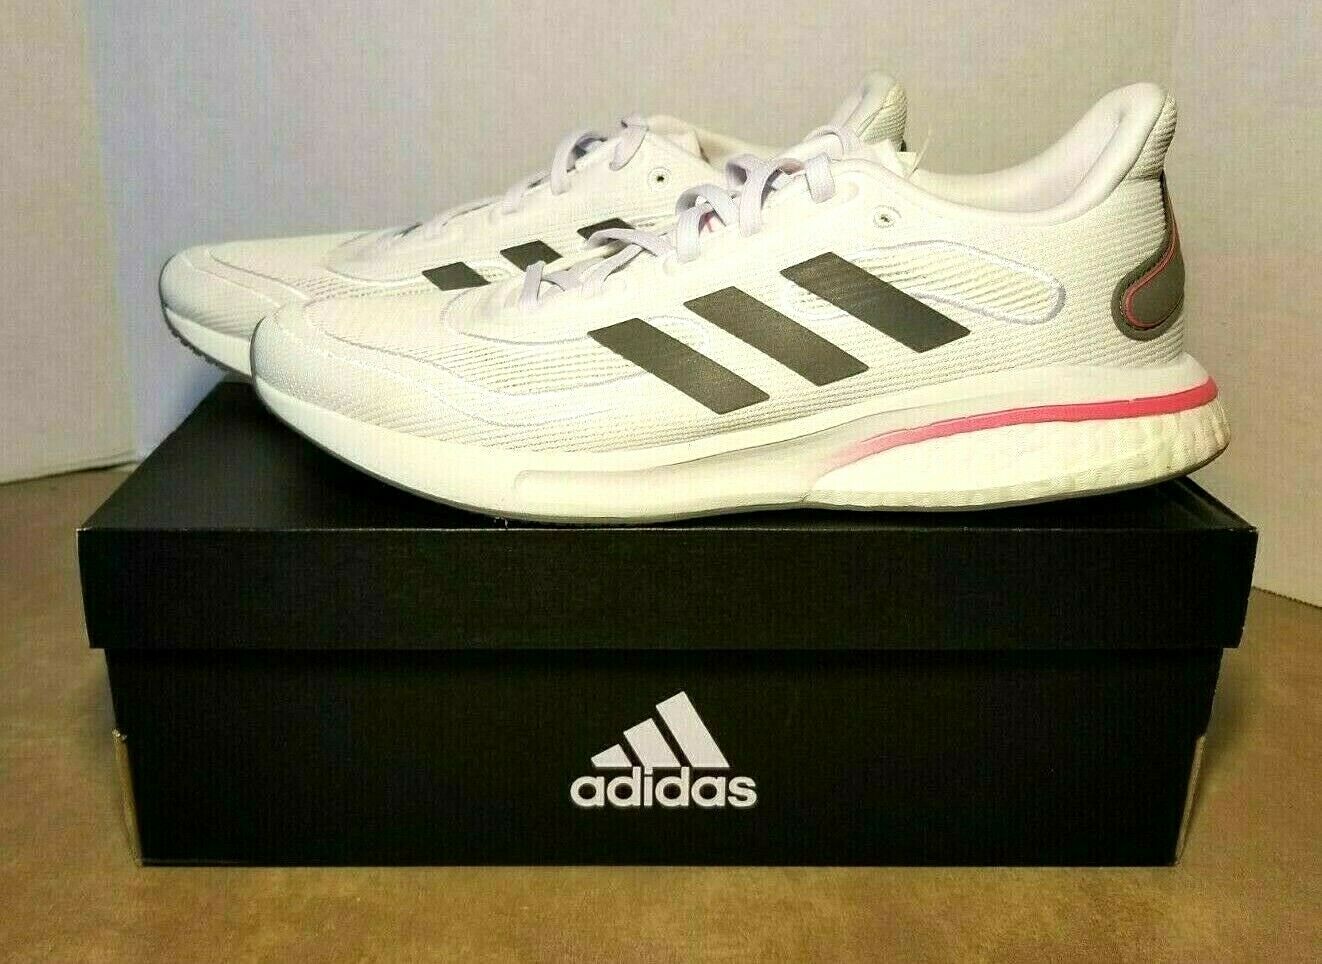 NEW~Adidas Women's Supernova Athletic Running Shoes~White/Grey/Pink~Sz 6 1/2